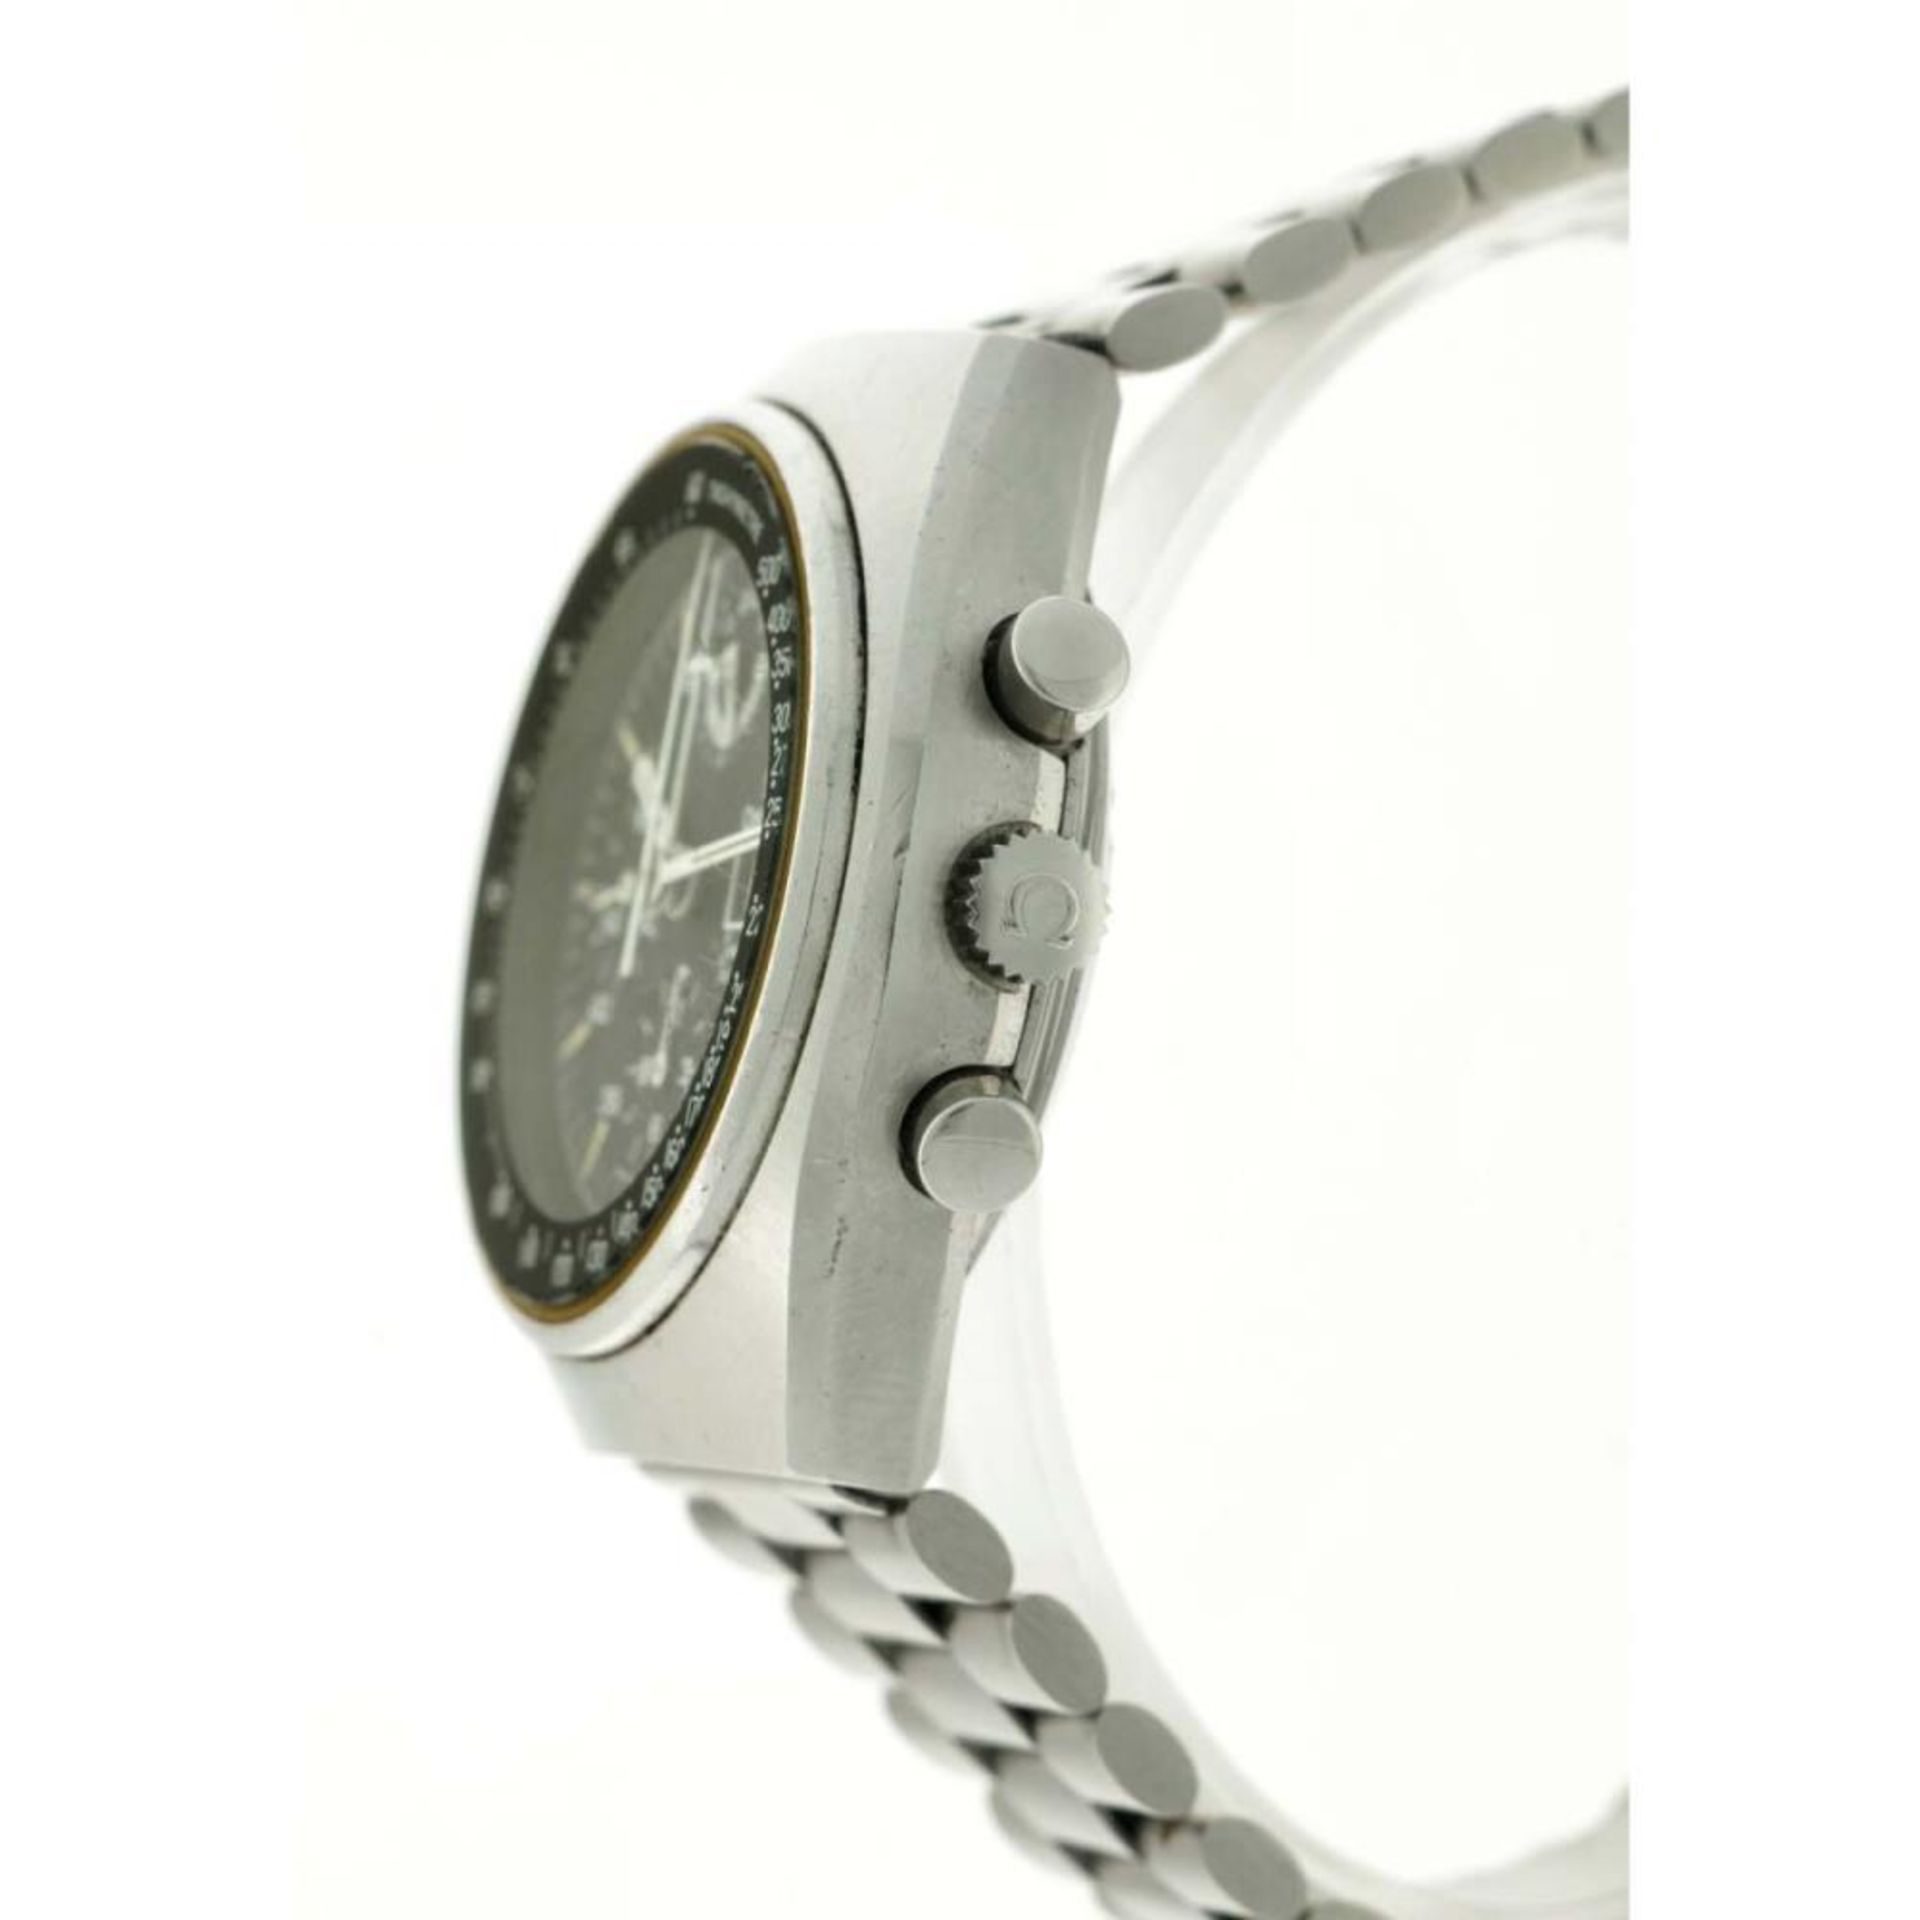 Omega Speedmaster mark 4.5 176.0012 - Men's watch - Approx. 1975. - Image 5 of 5